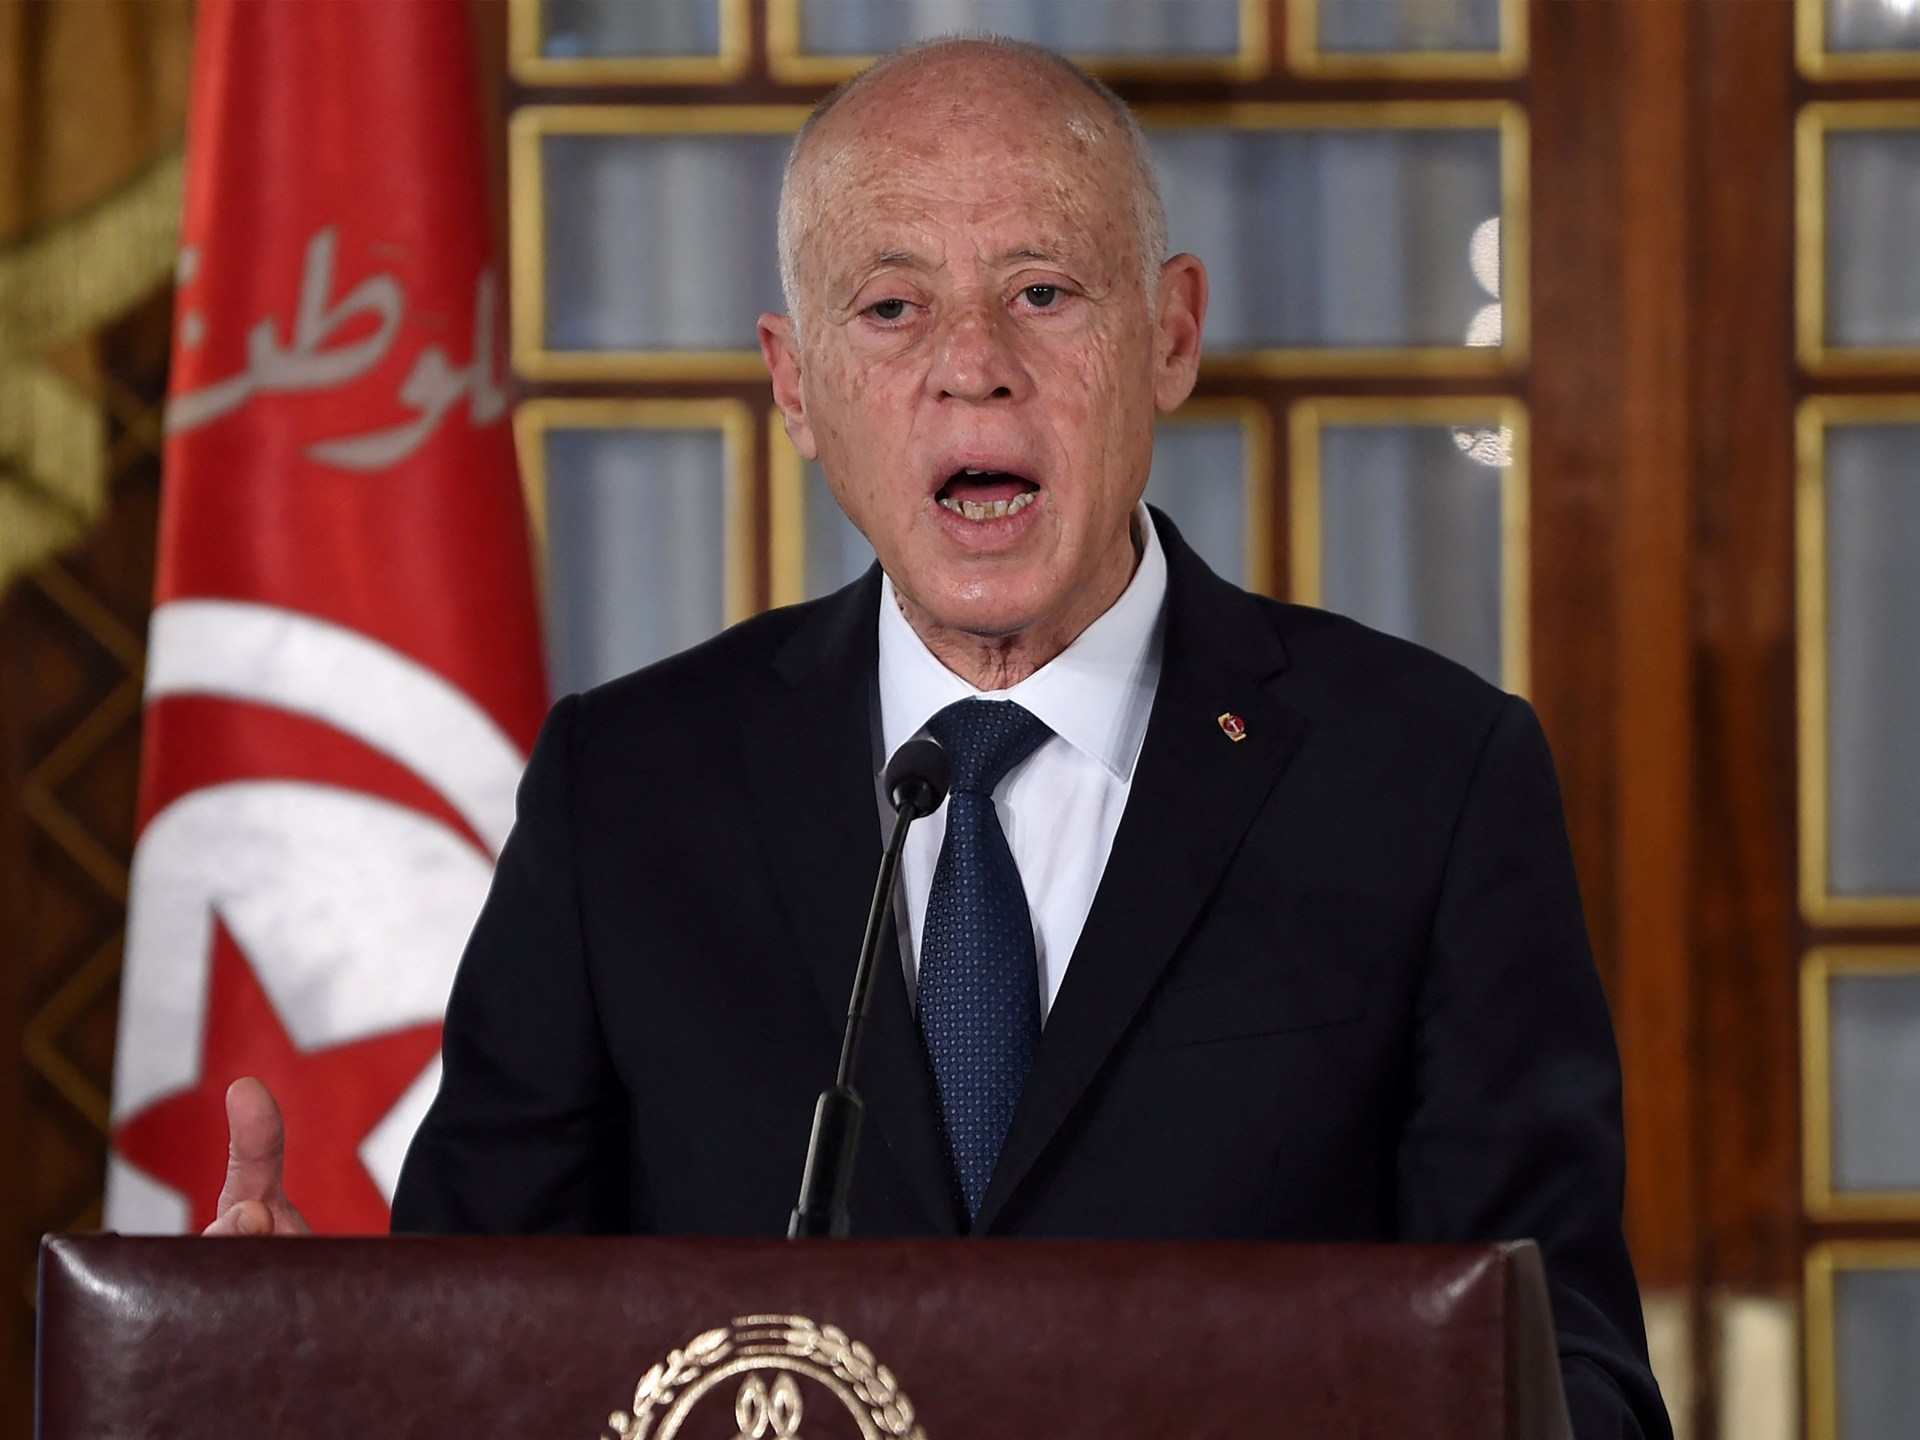 Tunisia anti-faux news regulation criminalises free of charge speech: Authorized group | News